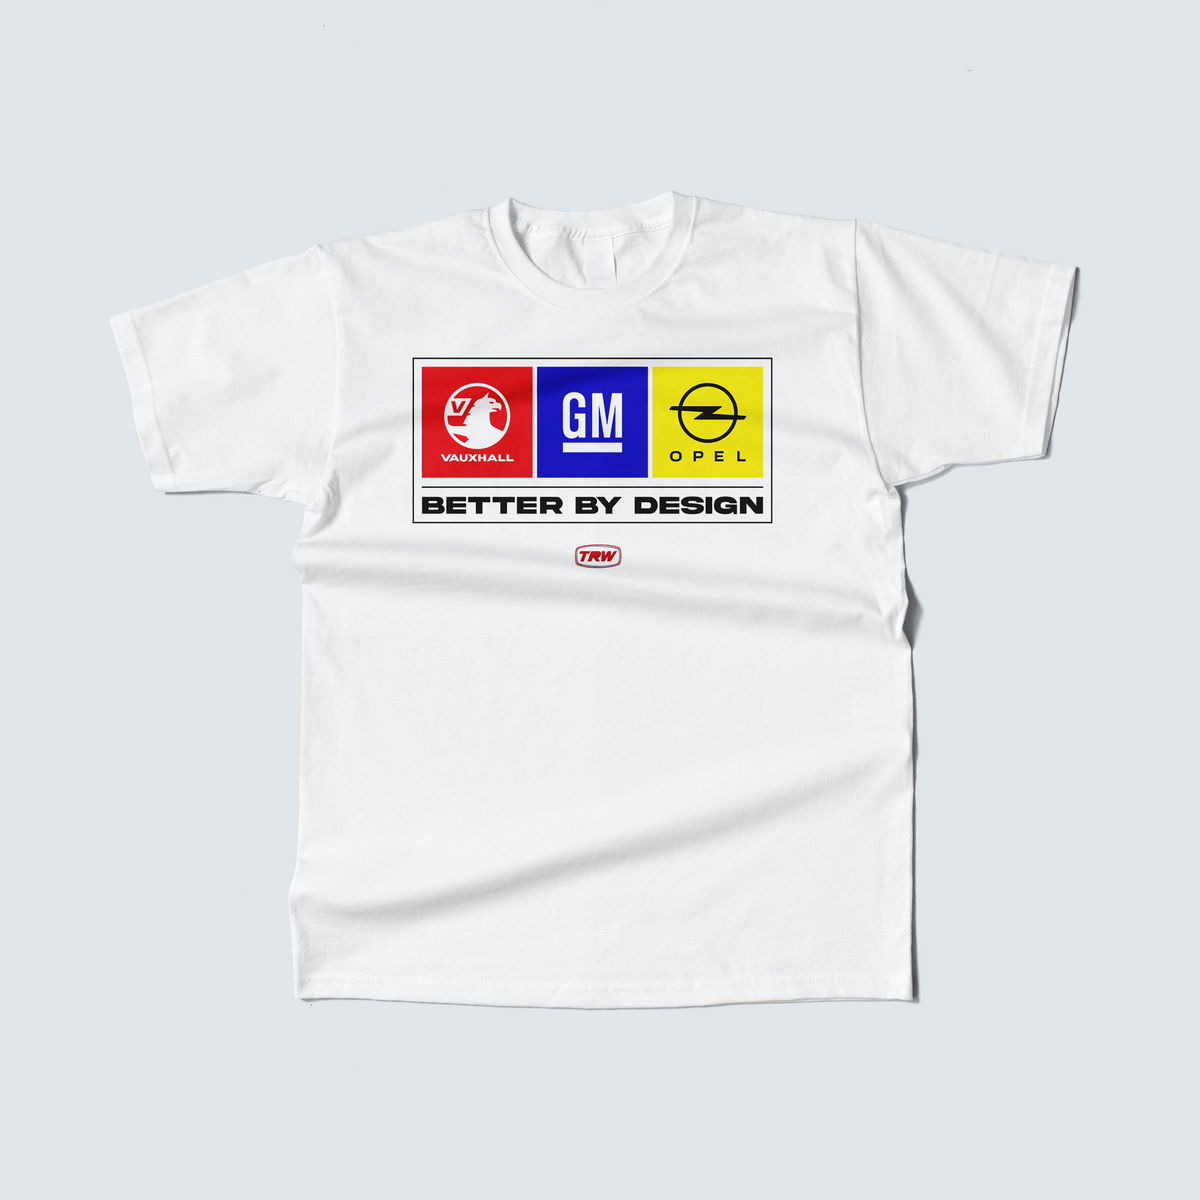 Nome do produto: Camiseta - Better by Design | Vauxhall GM Opel